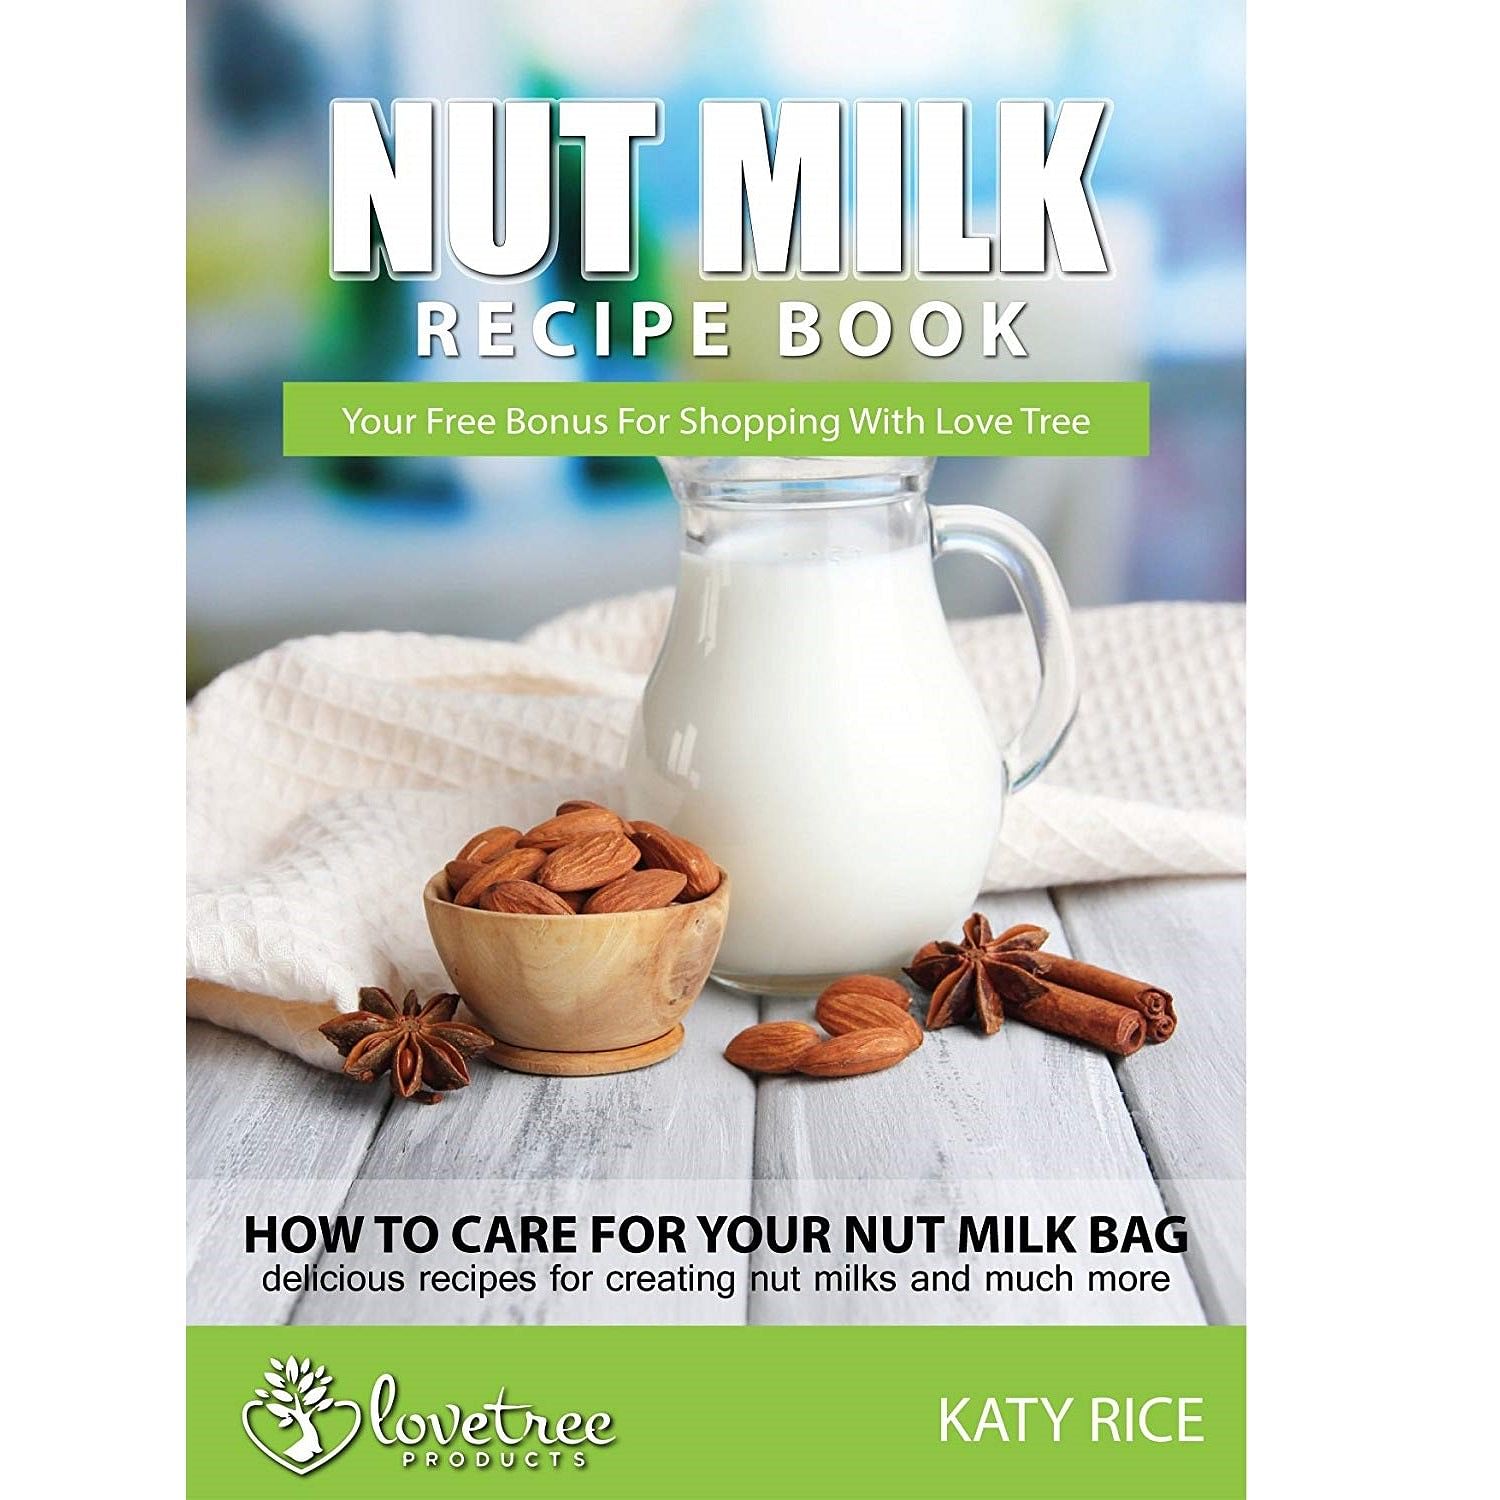 Large Nut Milk Bag size 12x12 inches, Multipurpose Strainer